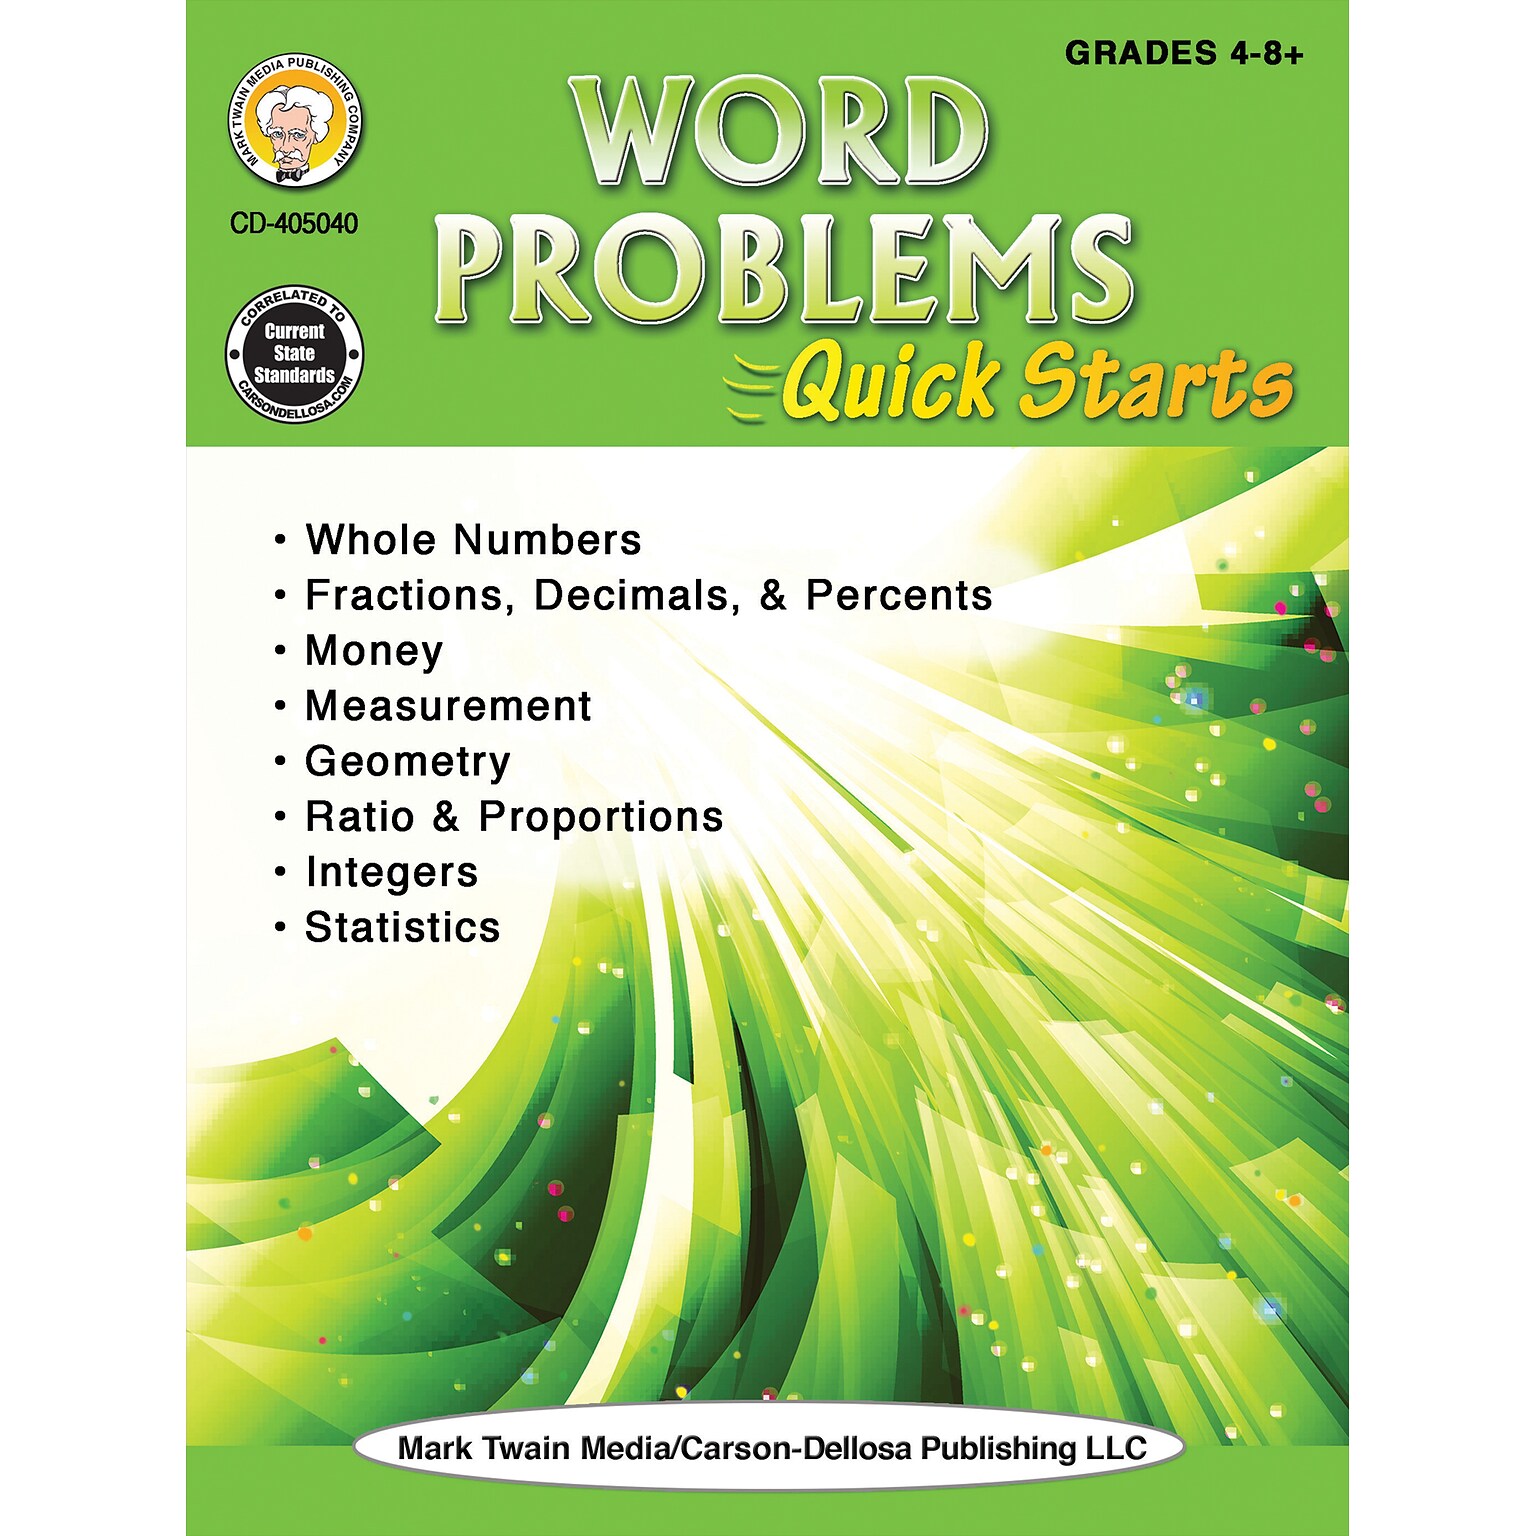 Word Problems Quick Starts Workbook by Anne Steele, Paperback (405040)